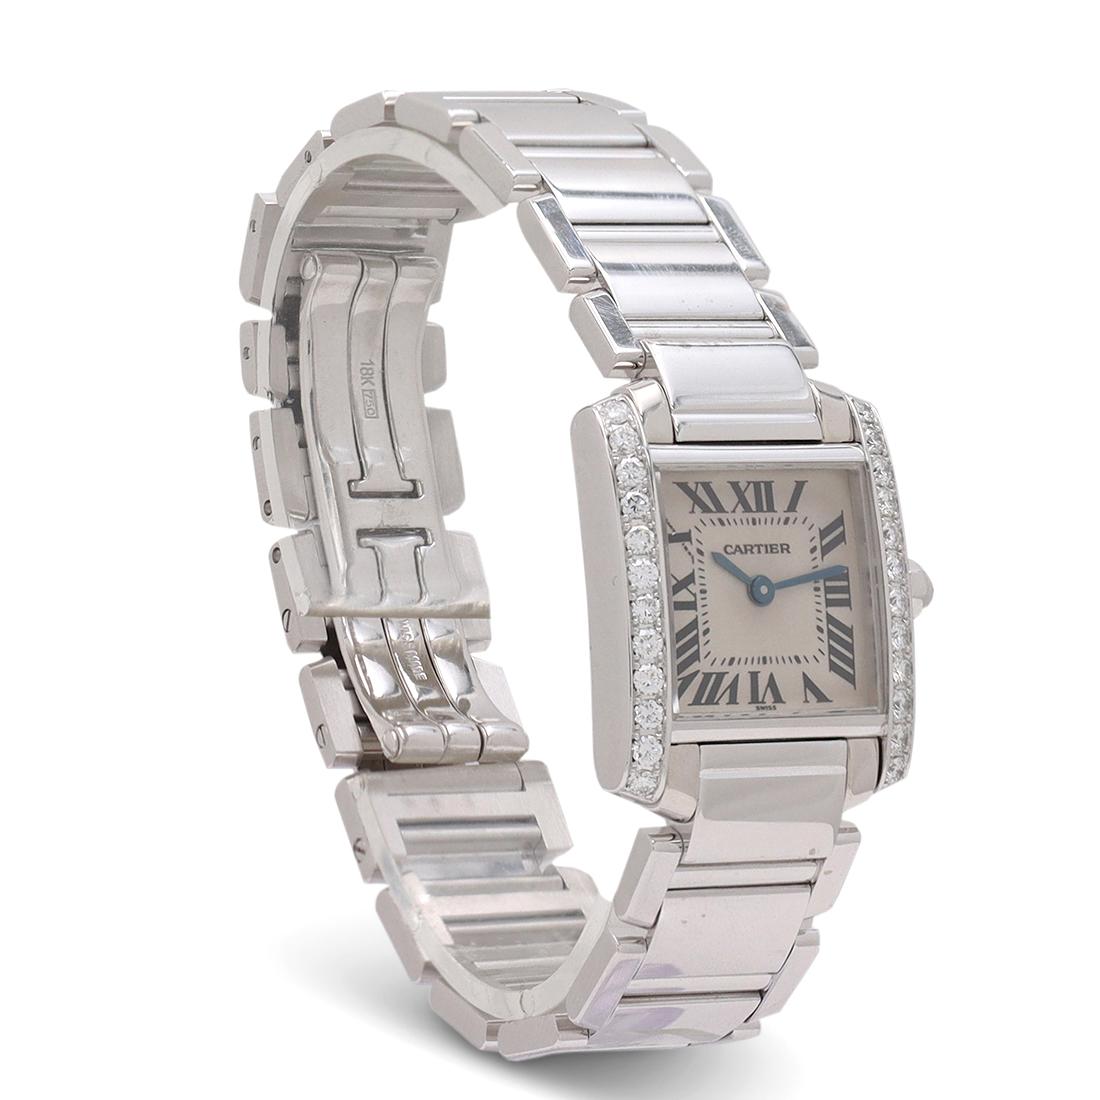 Brilliant Cut Cartier 'Tank Française' White Gold and Diamond Ladies Watch